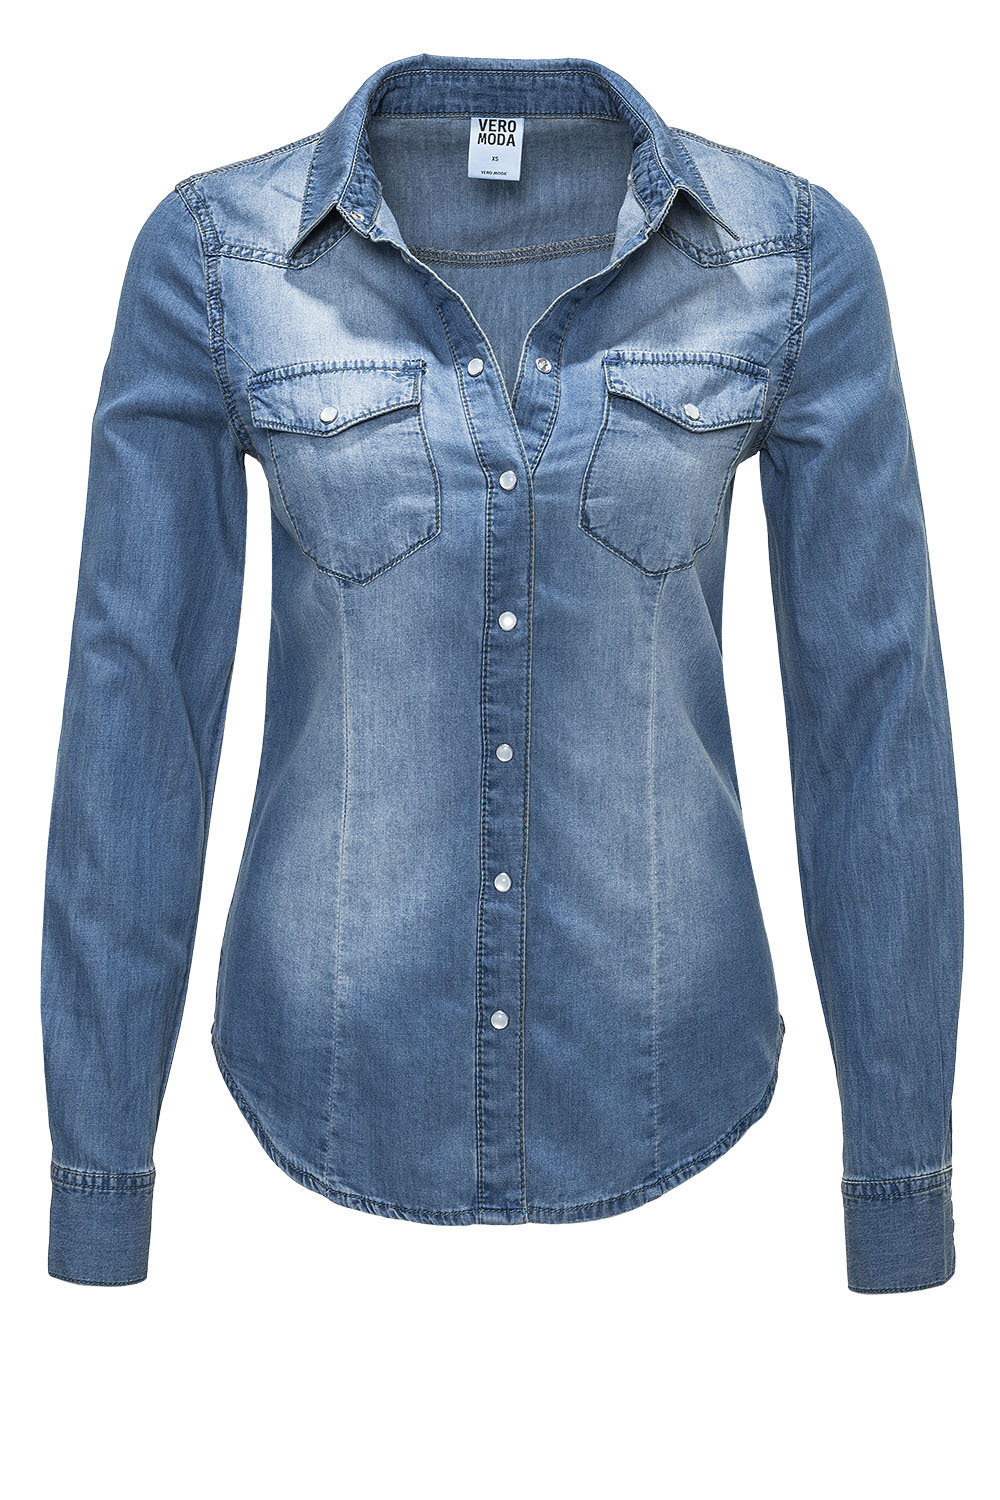 womens denim shirt vero moda womenu0027s denim blouse ls denim shirt med. blue, 29,95 u20ac HLLABTV